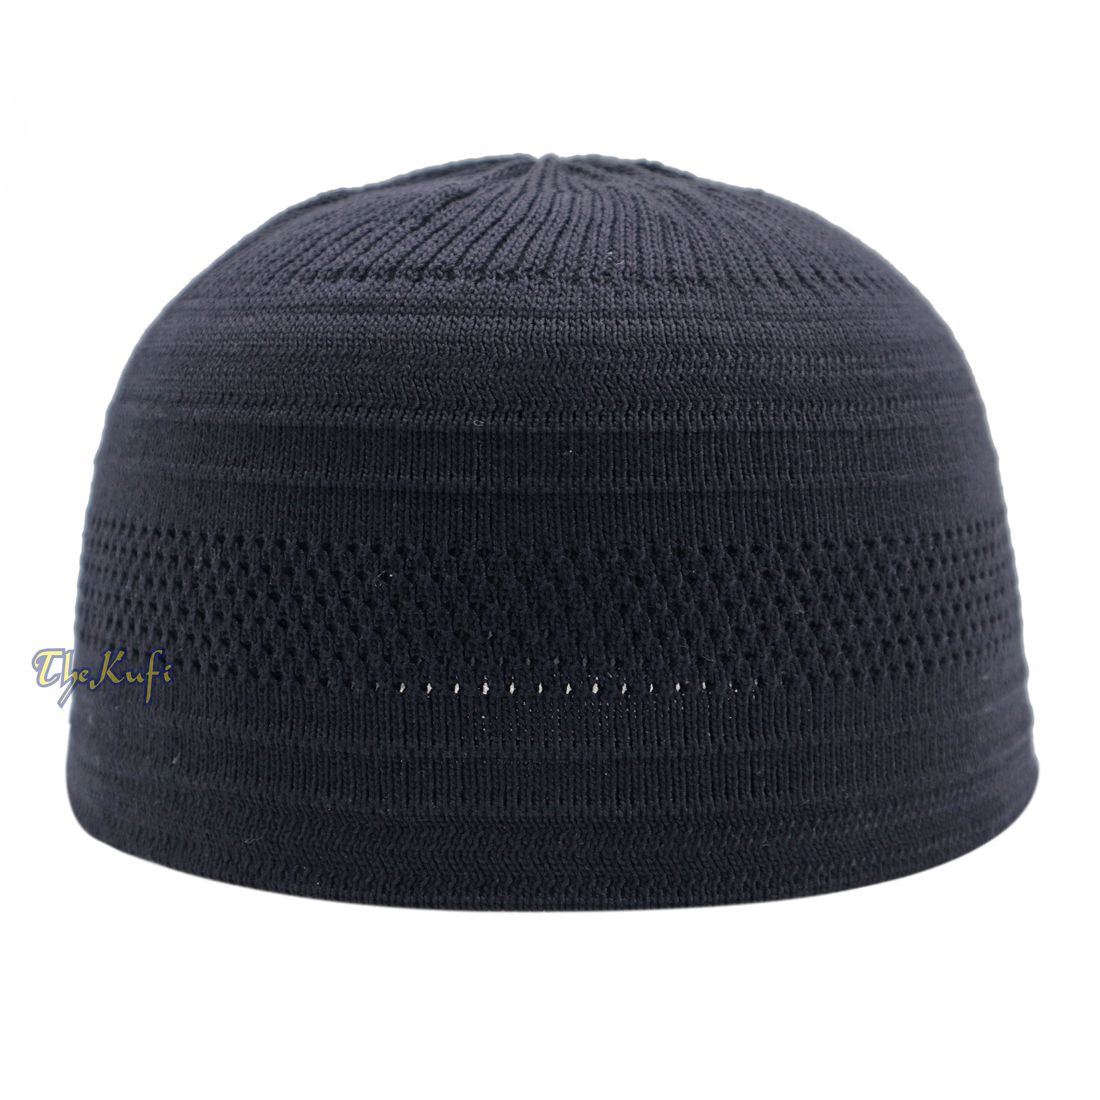 Graphite Cotton Stretch-Knit Kufi Hat Skull Cap